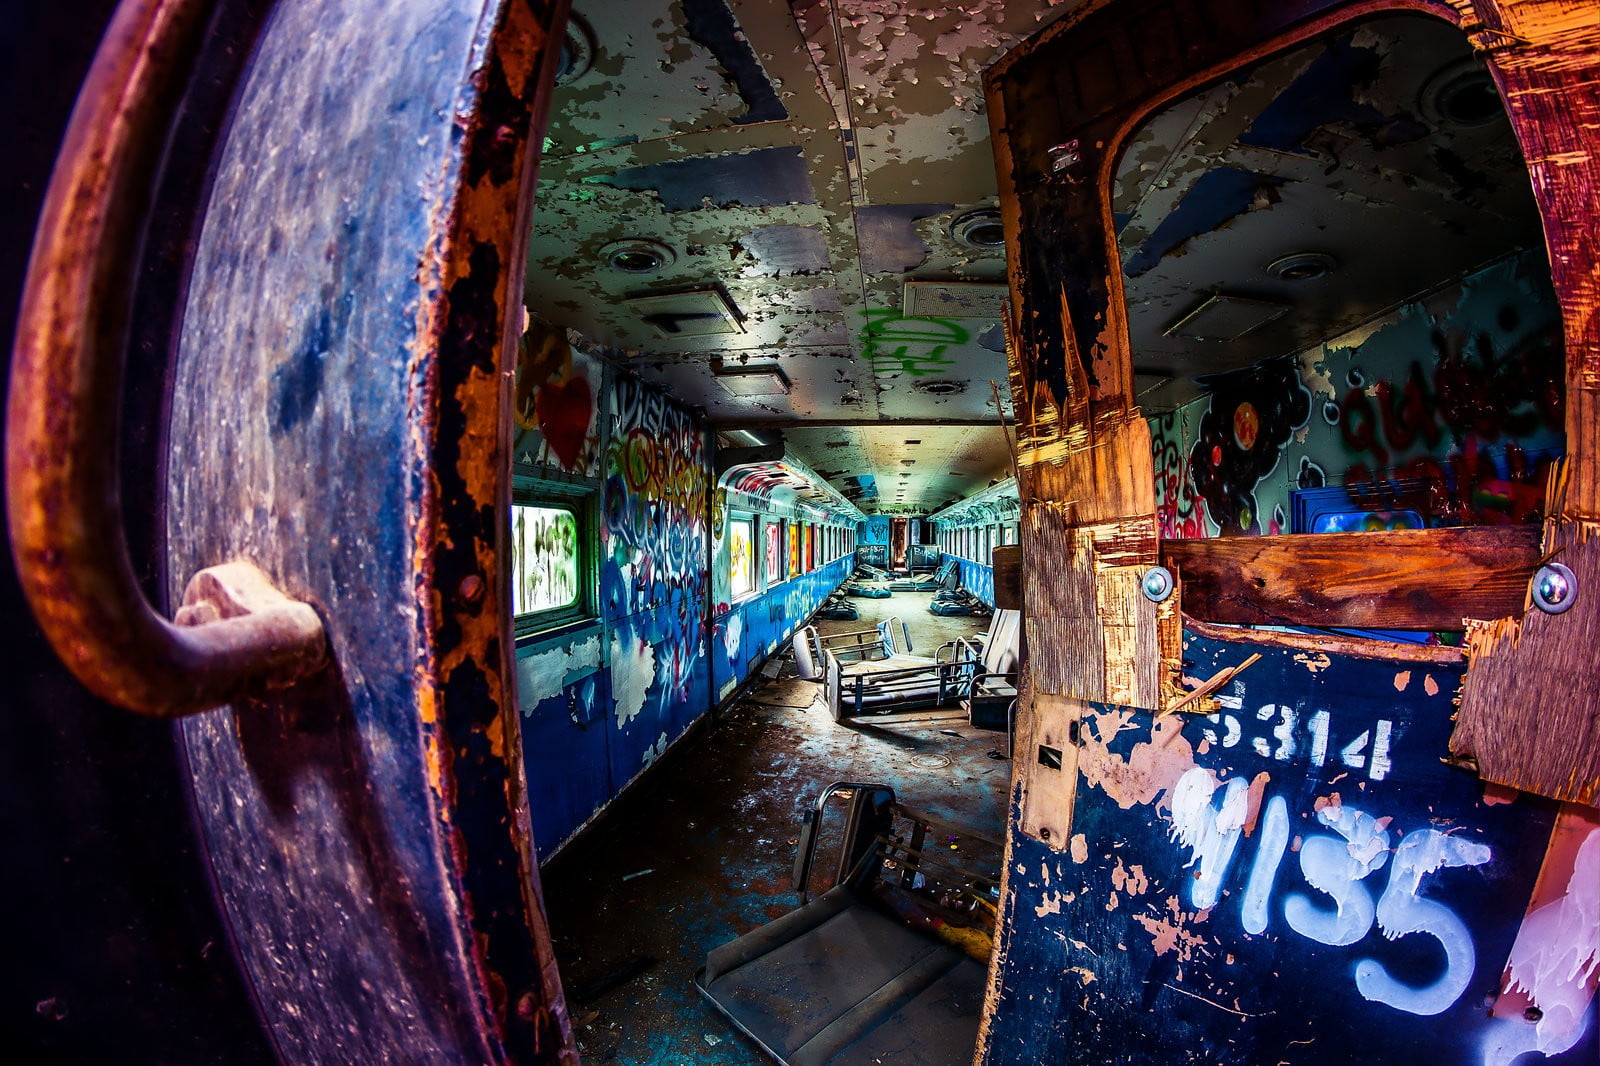 blue and gray train, ruin, graffiti, metal, damaged, abandoned